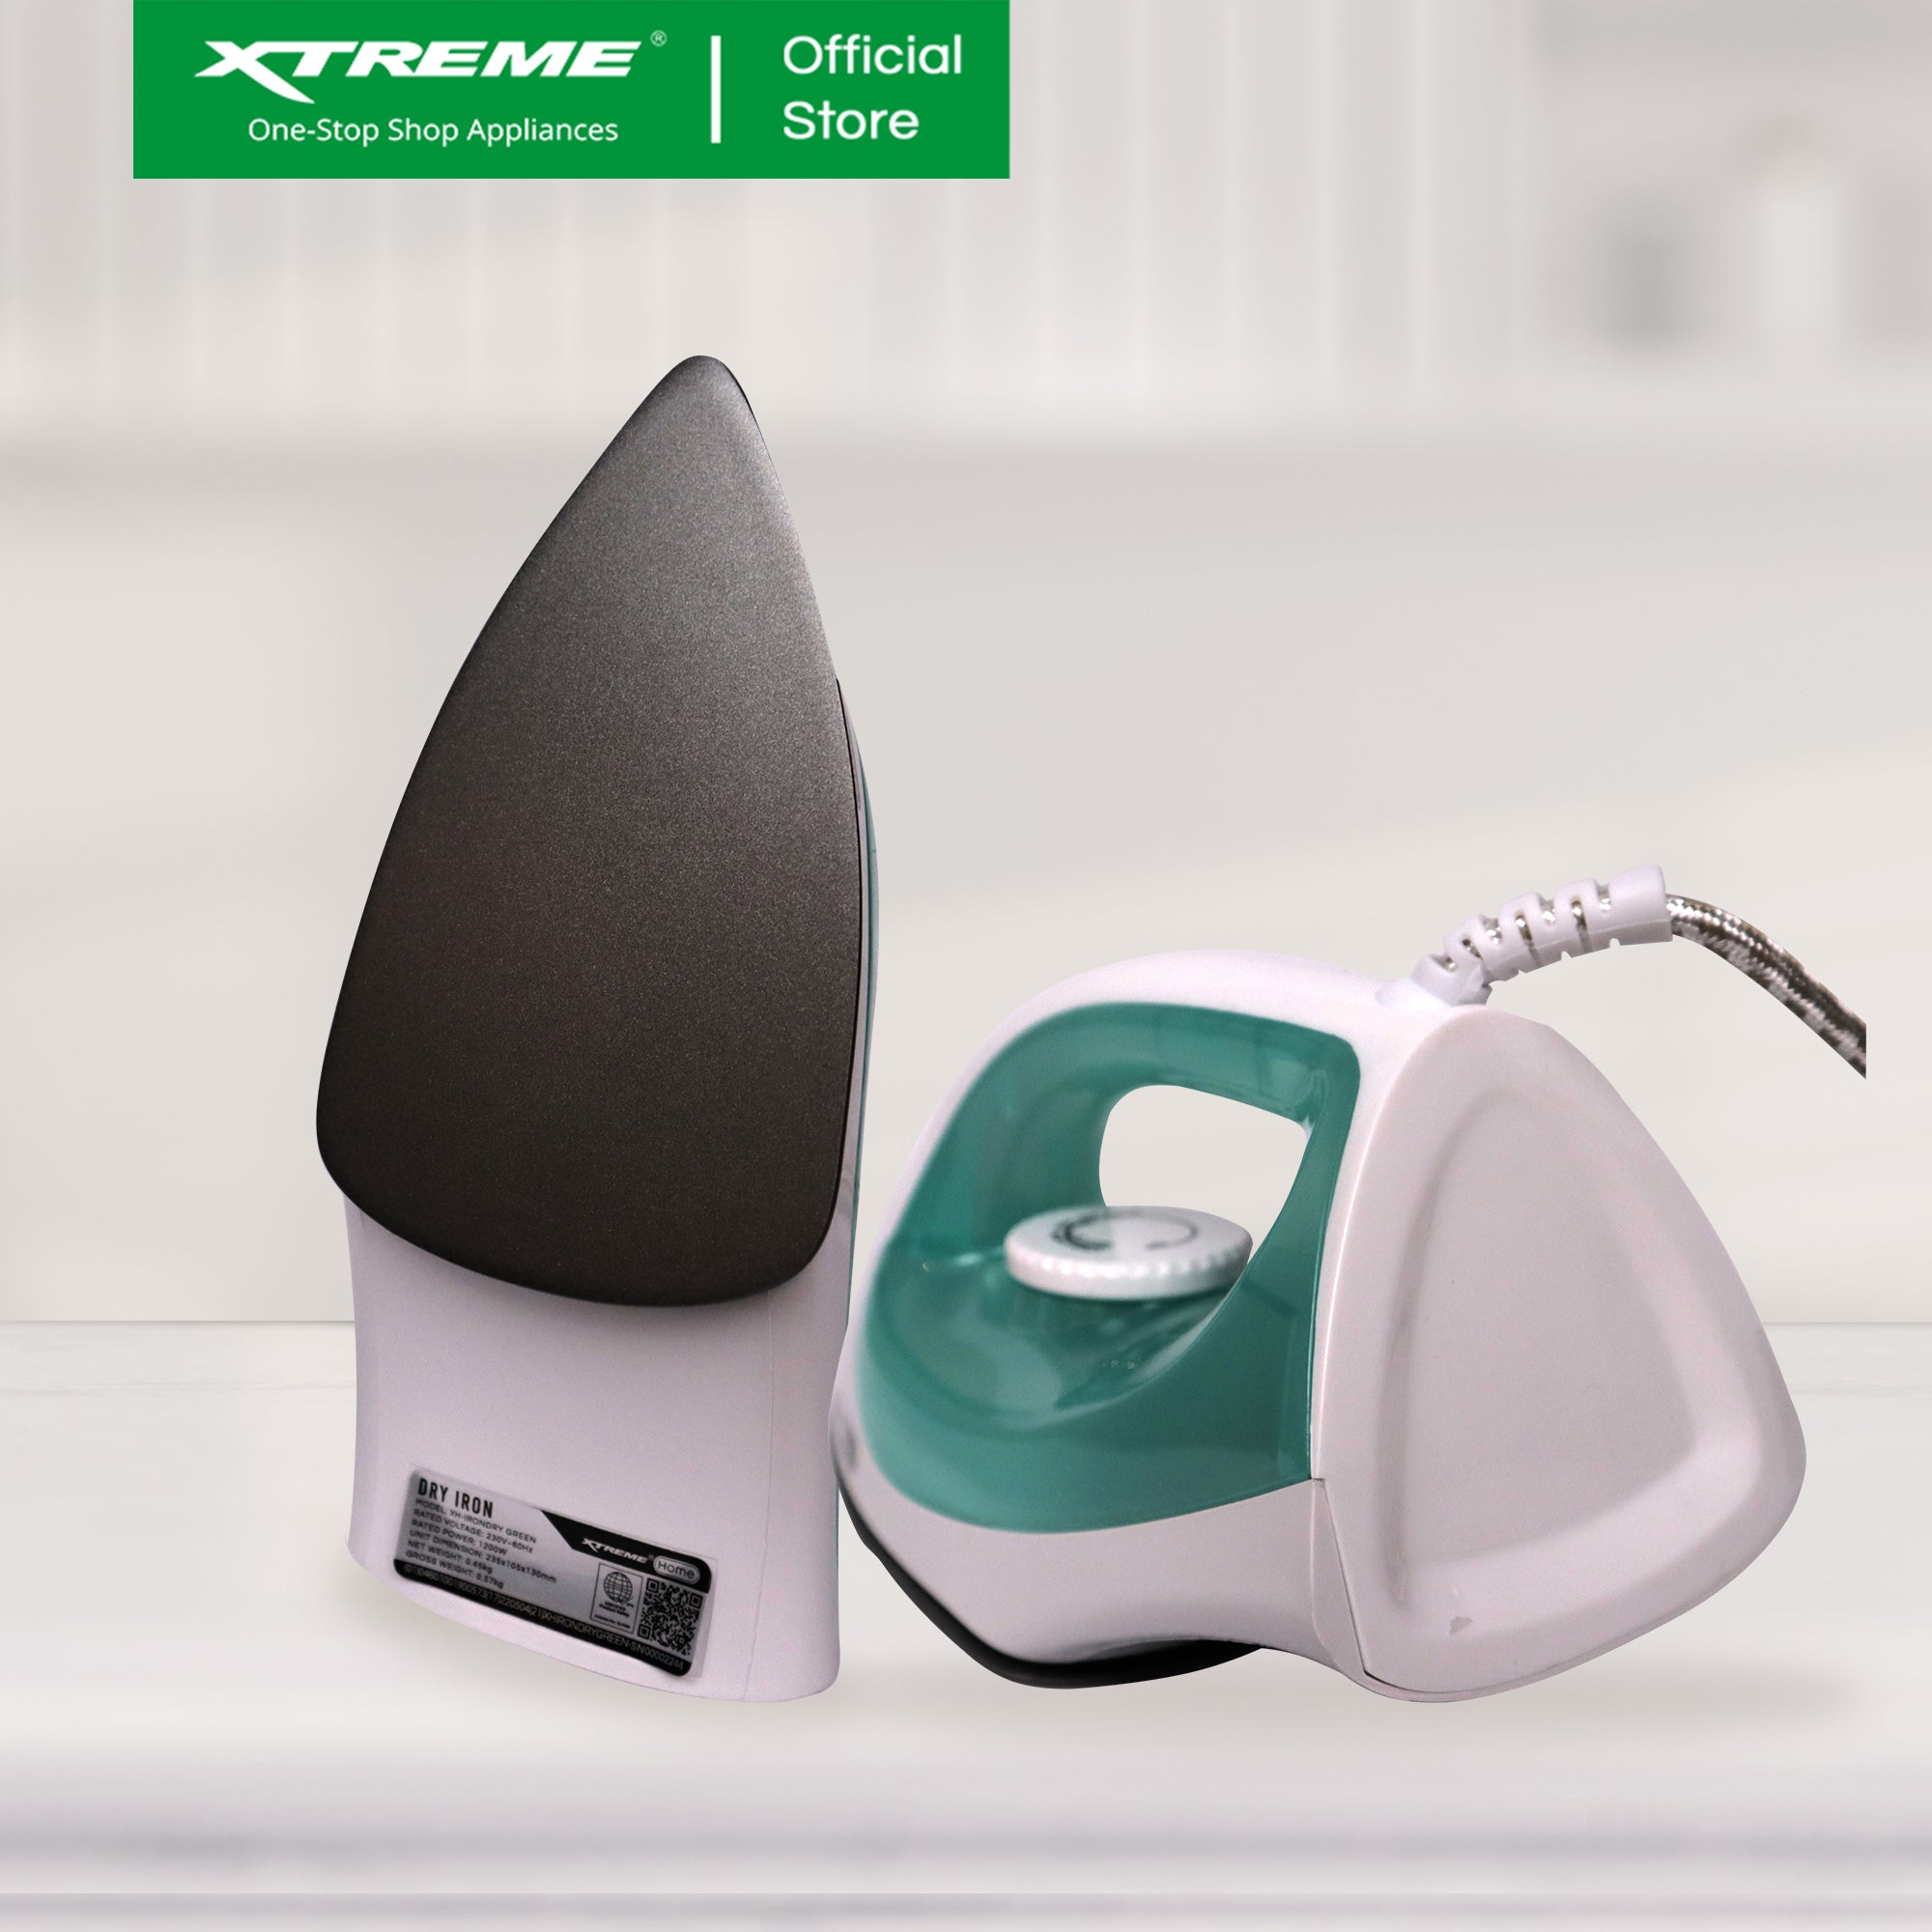 XTREME HOME Dry Iron (Green) | XH-IRONDRYGREEN